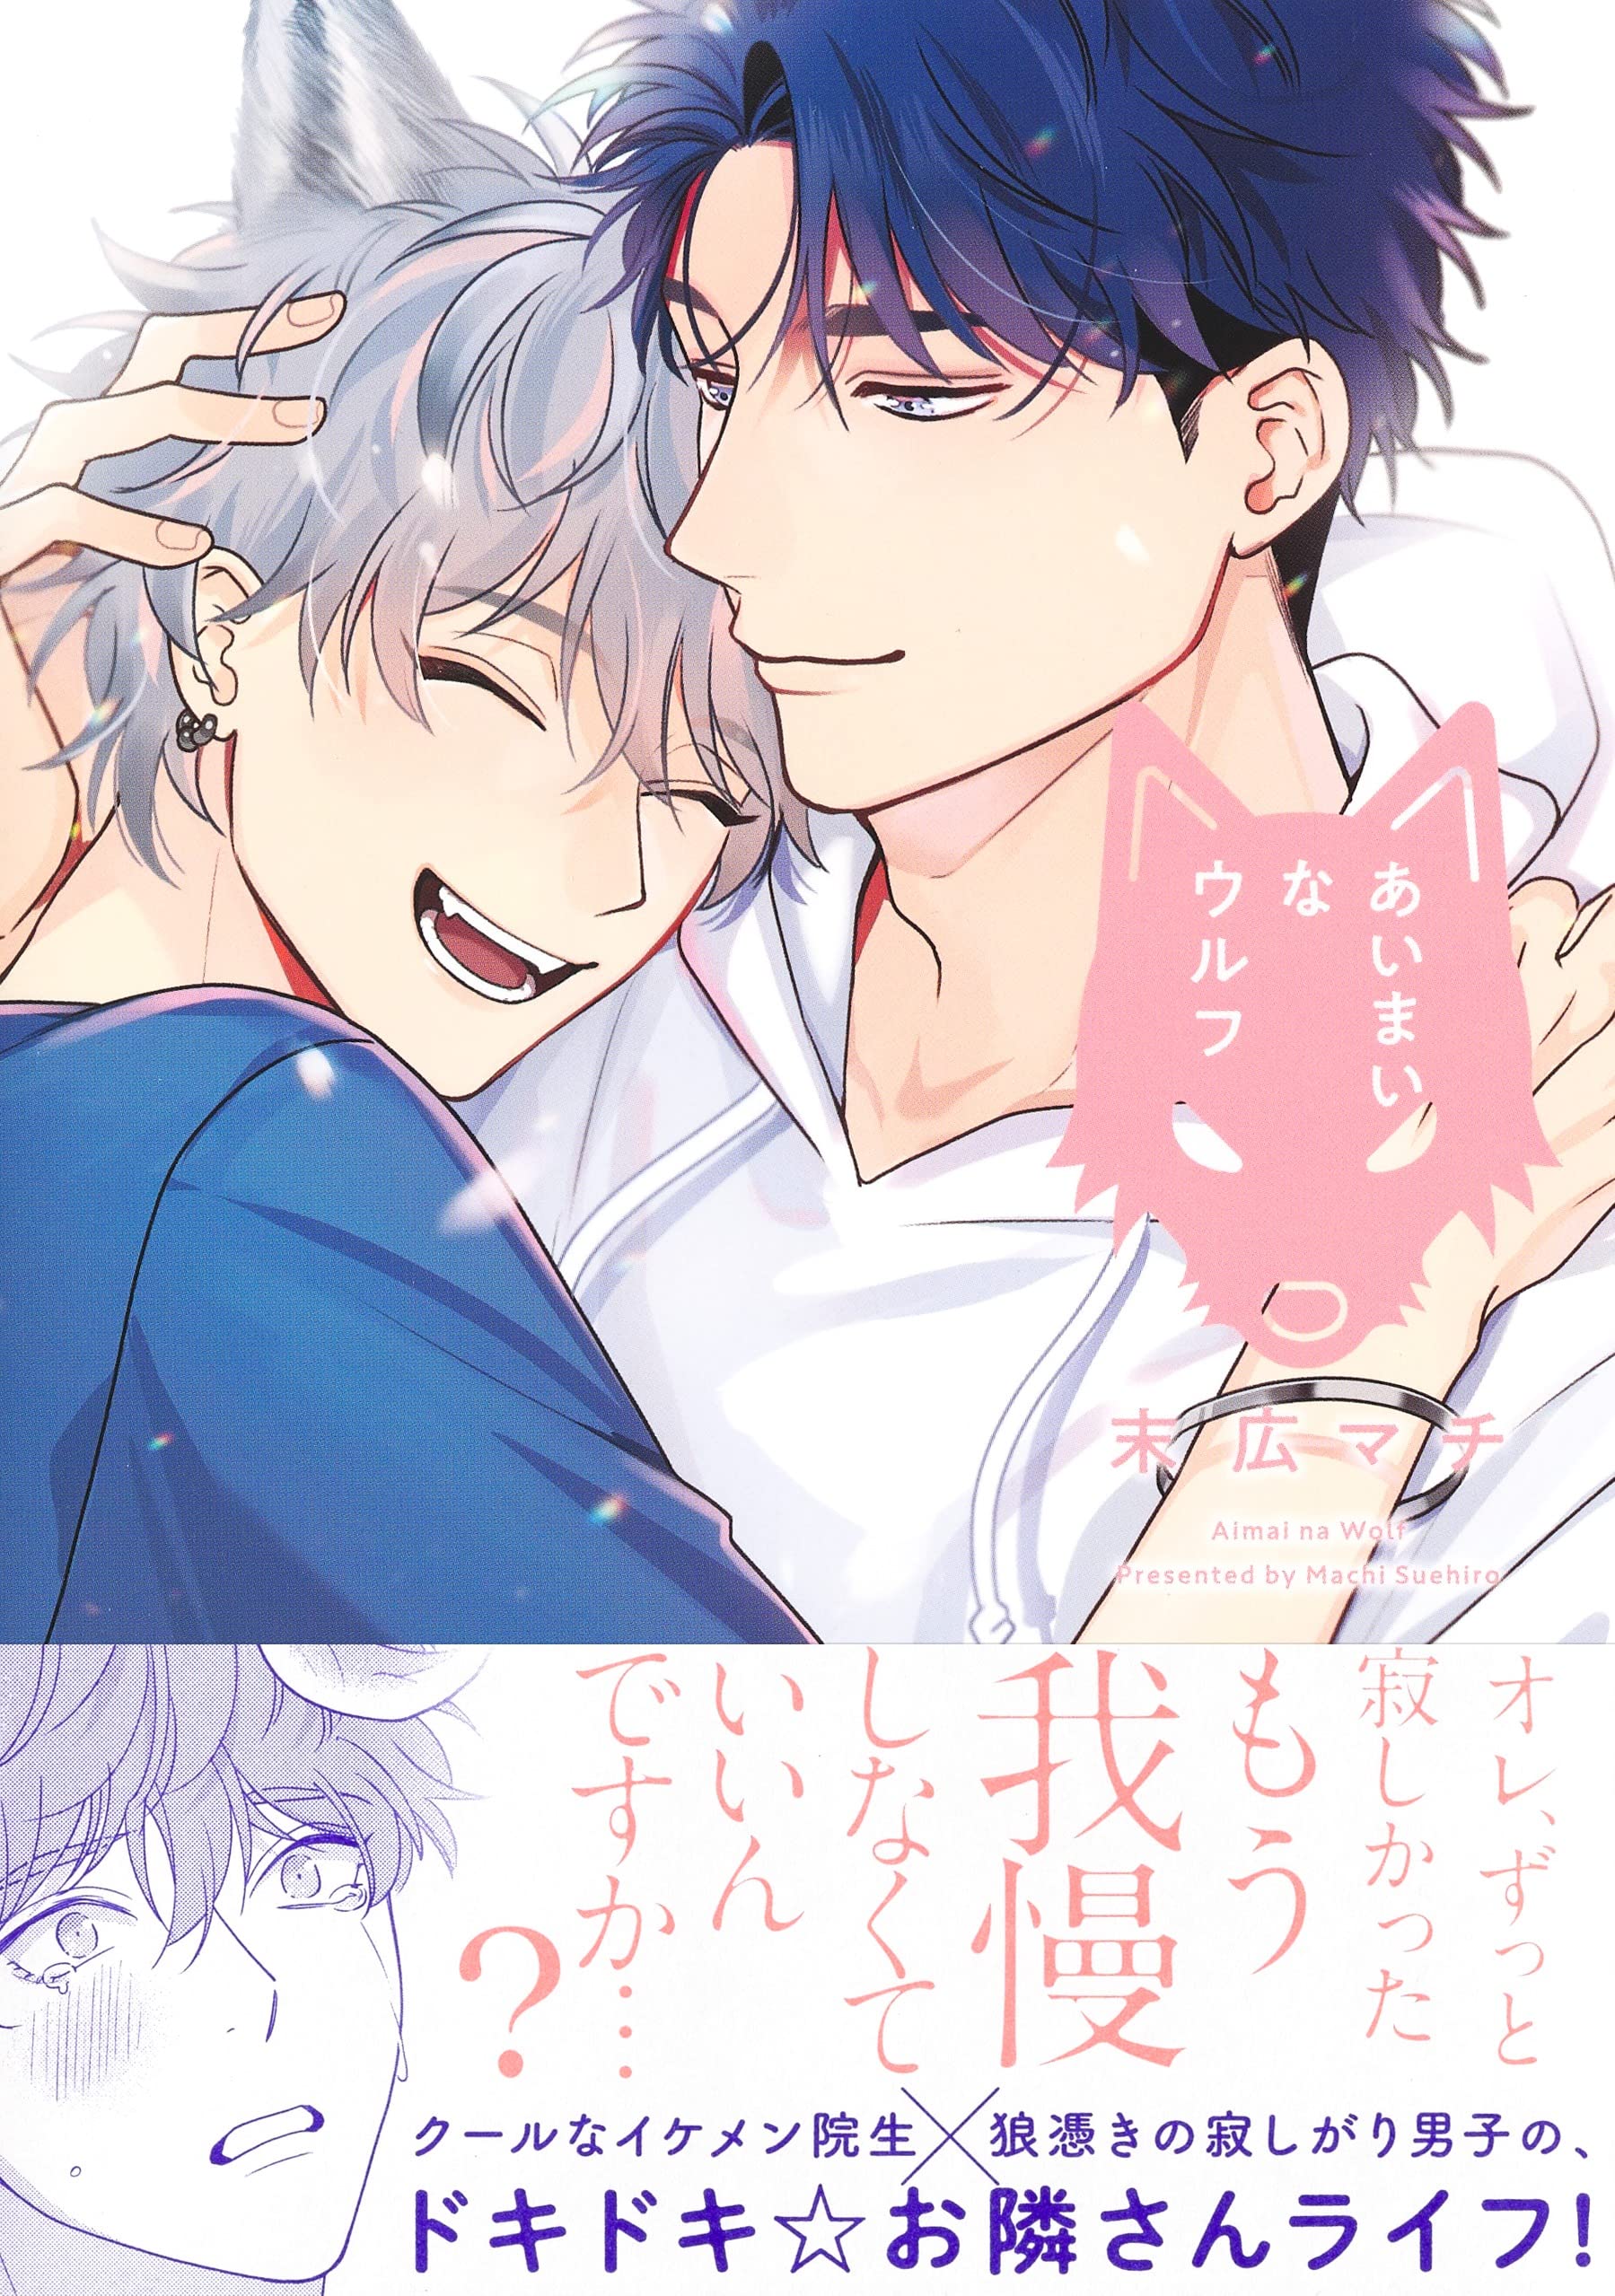 Boys Love (Yaoi) Comics - Aimai na Wolf (あいまいなウルフ (eyesコミックス)) / Suehiro Machi